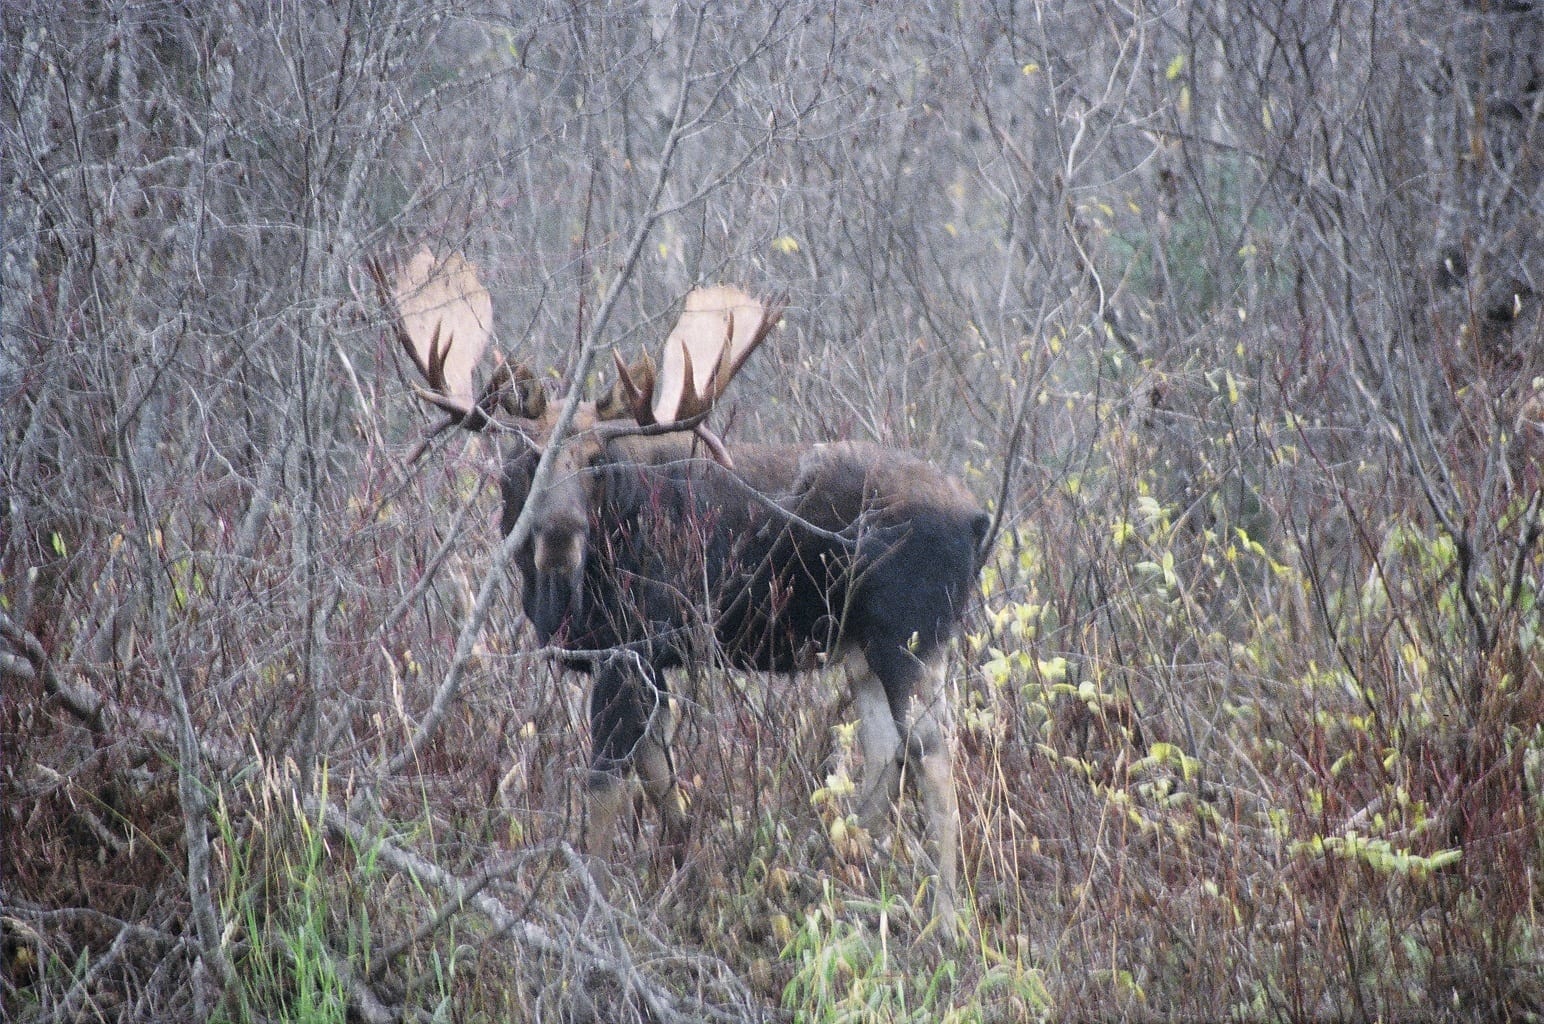 A nice British Columbia bull moose